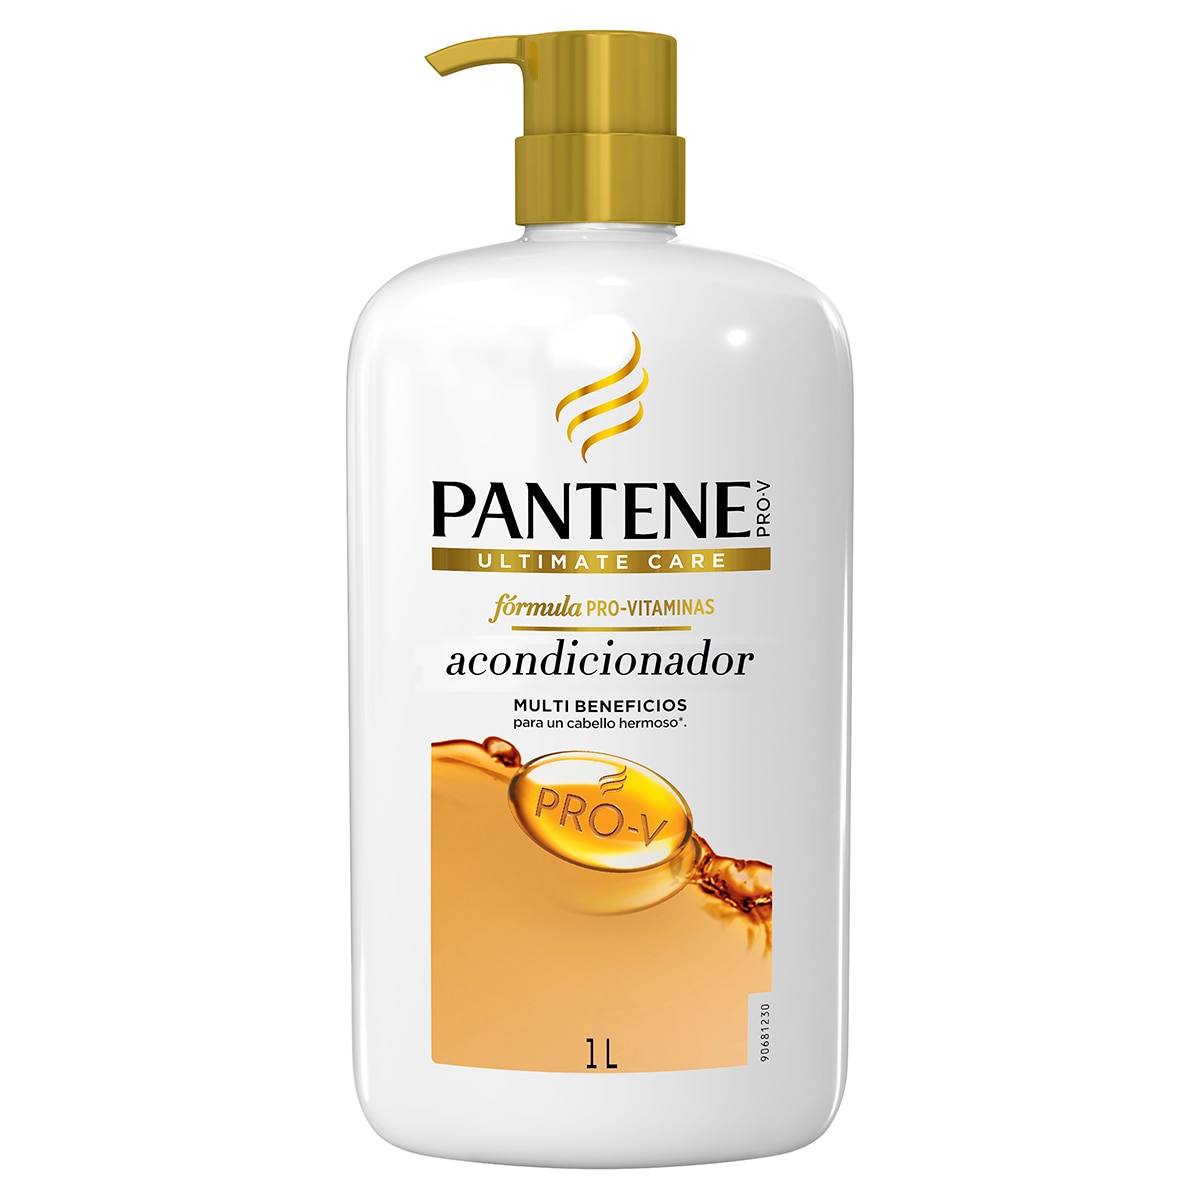 Pantene Ultimate Care, acondicionador 1 L